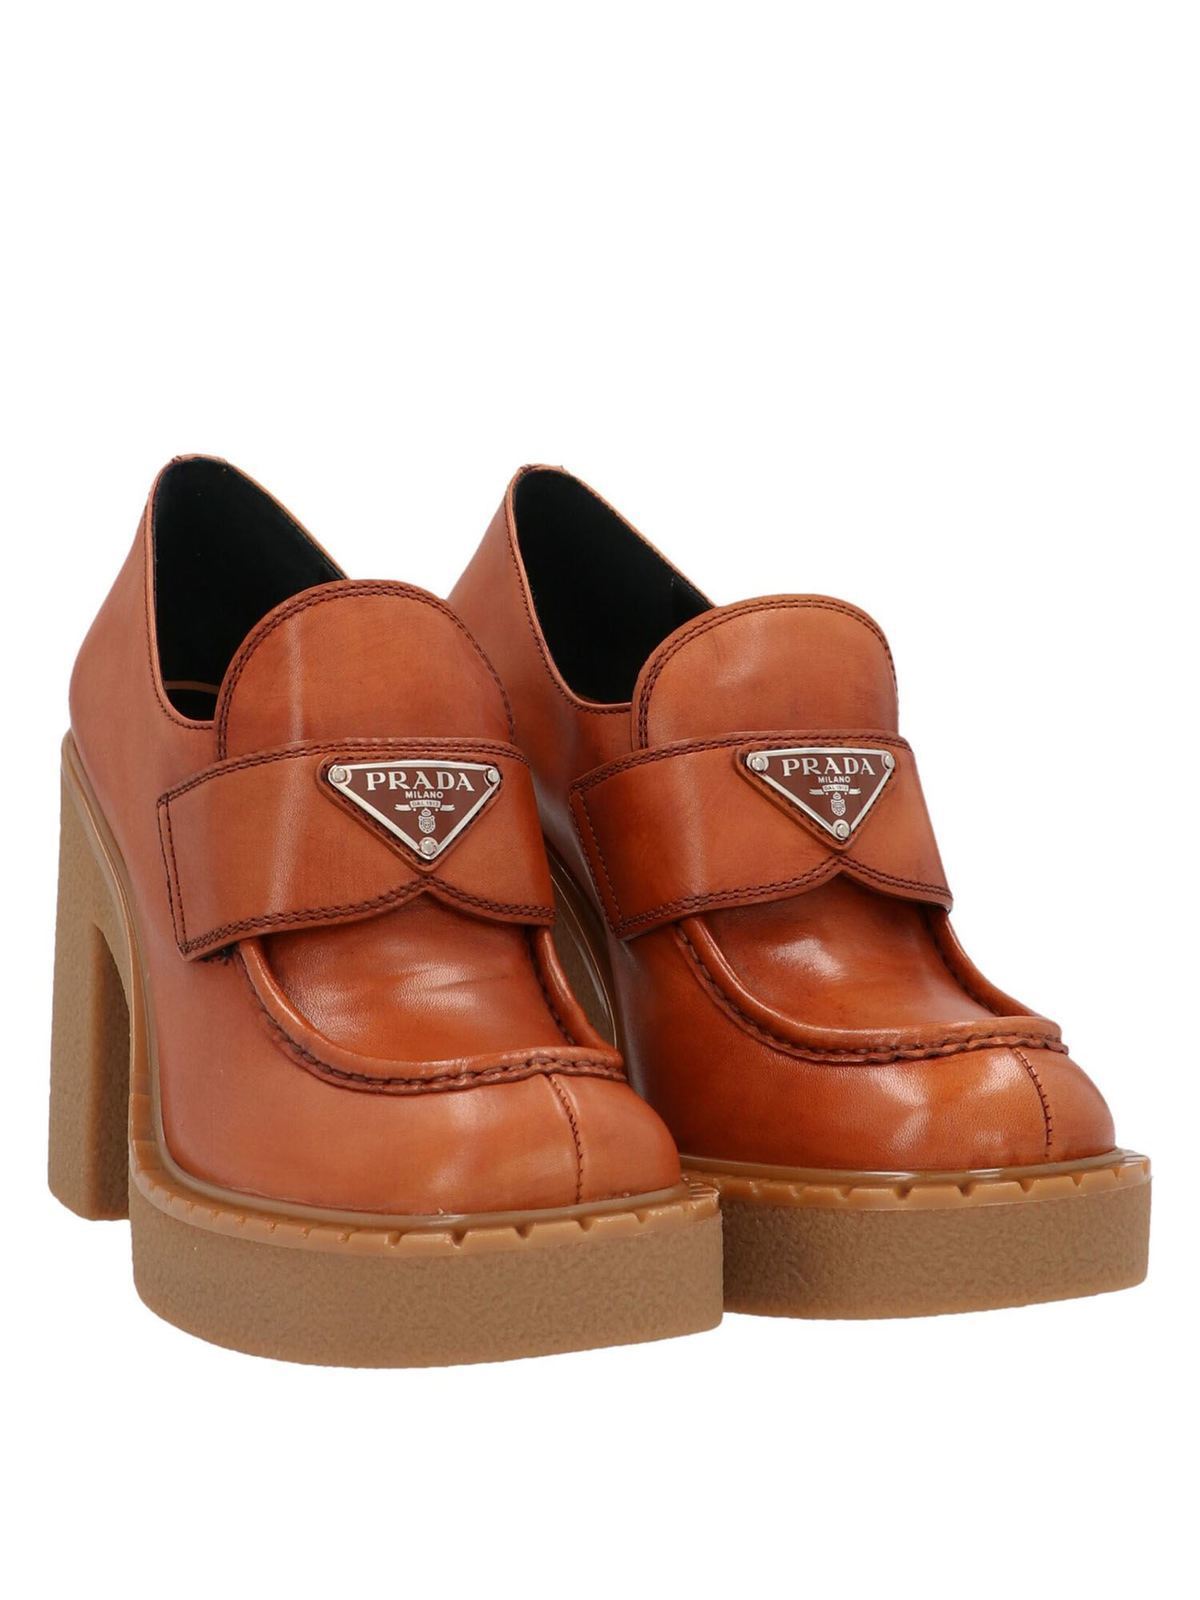 prada terracotta shoes